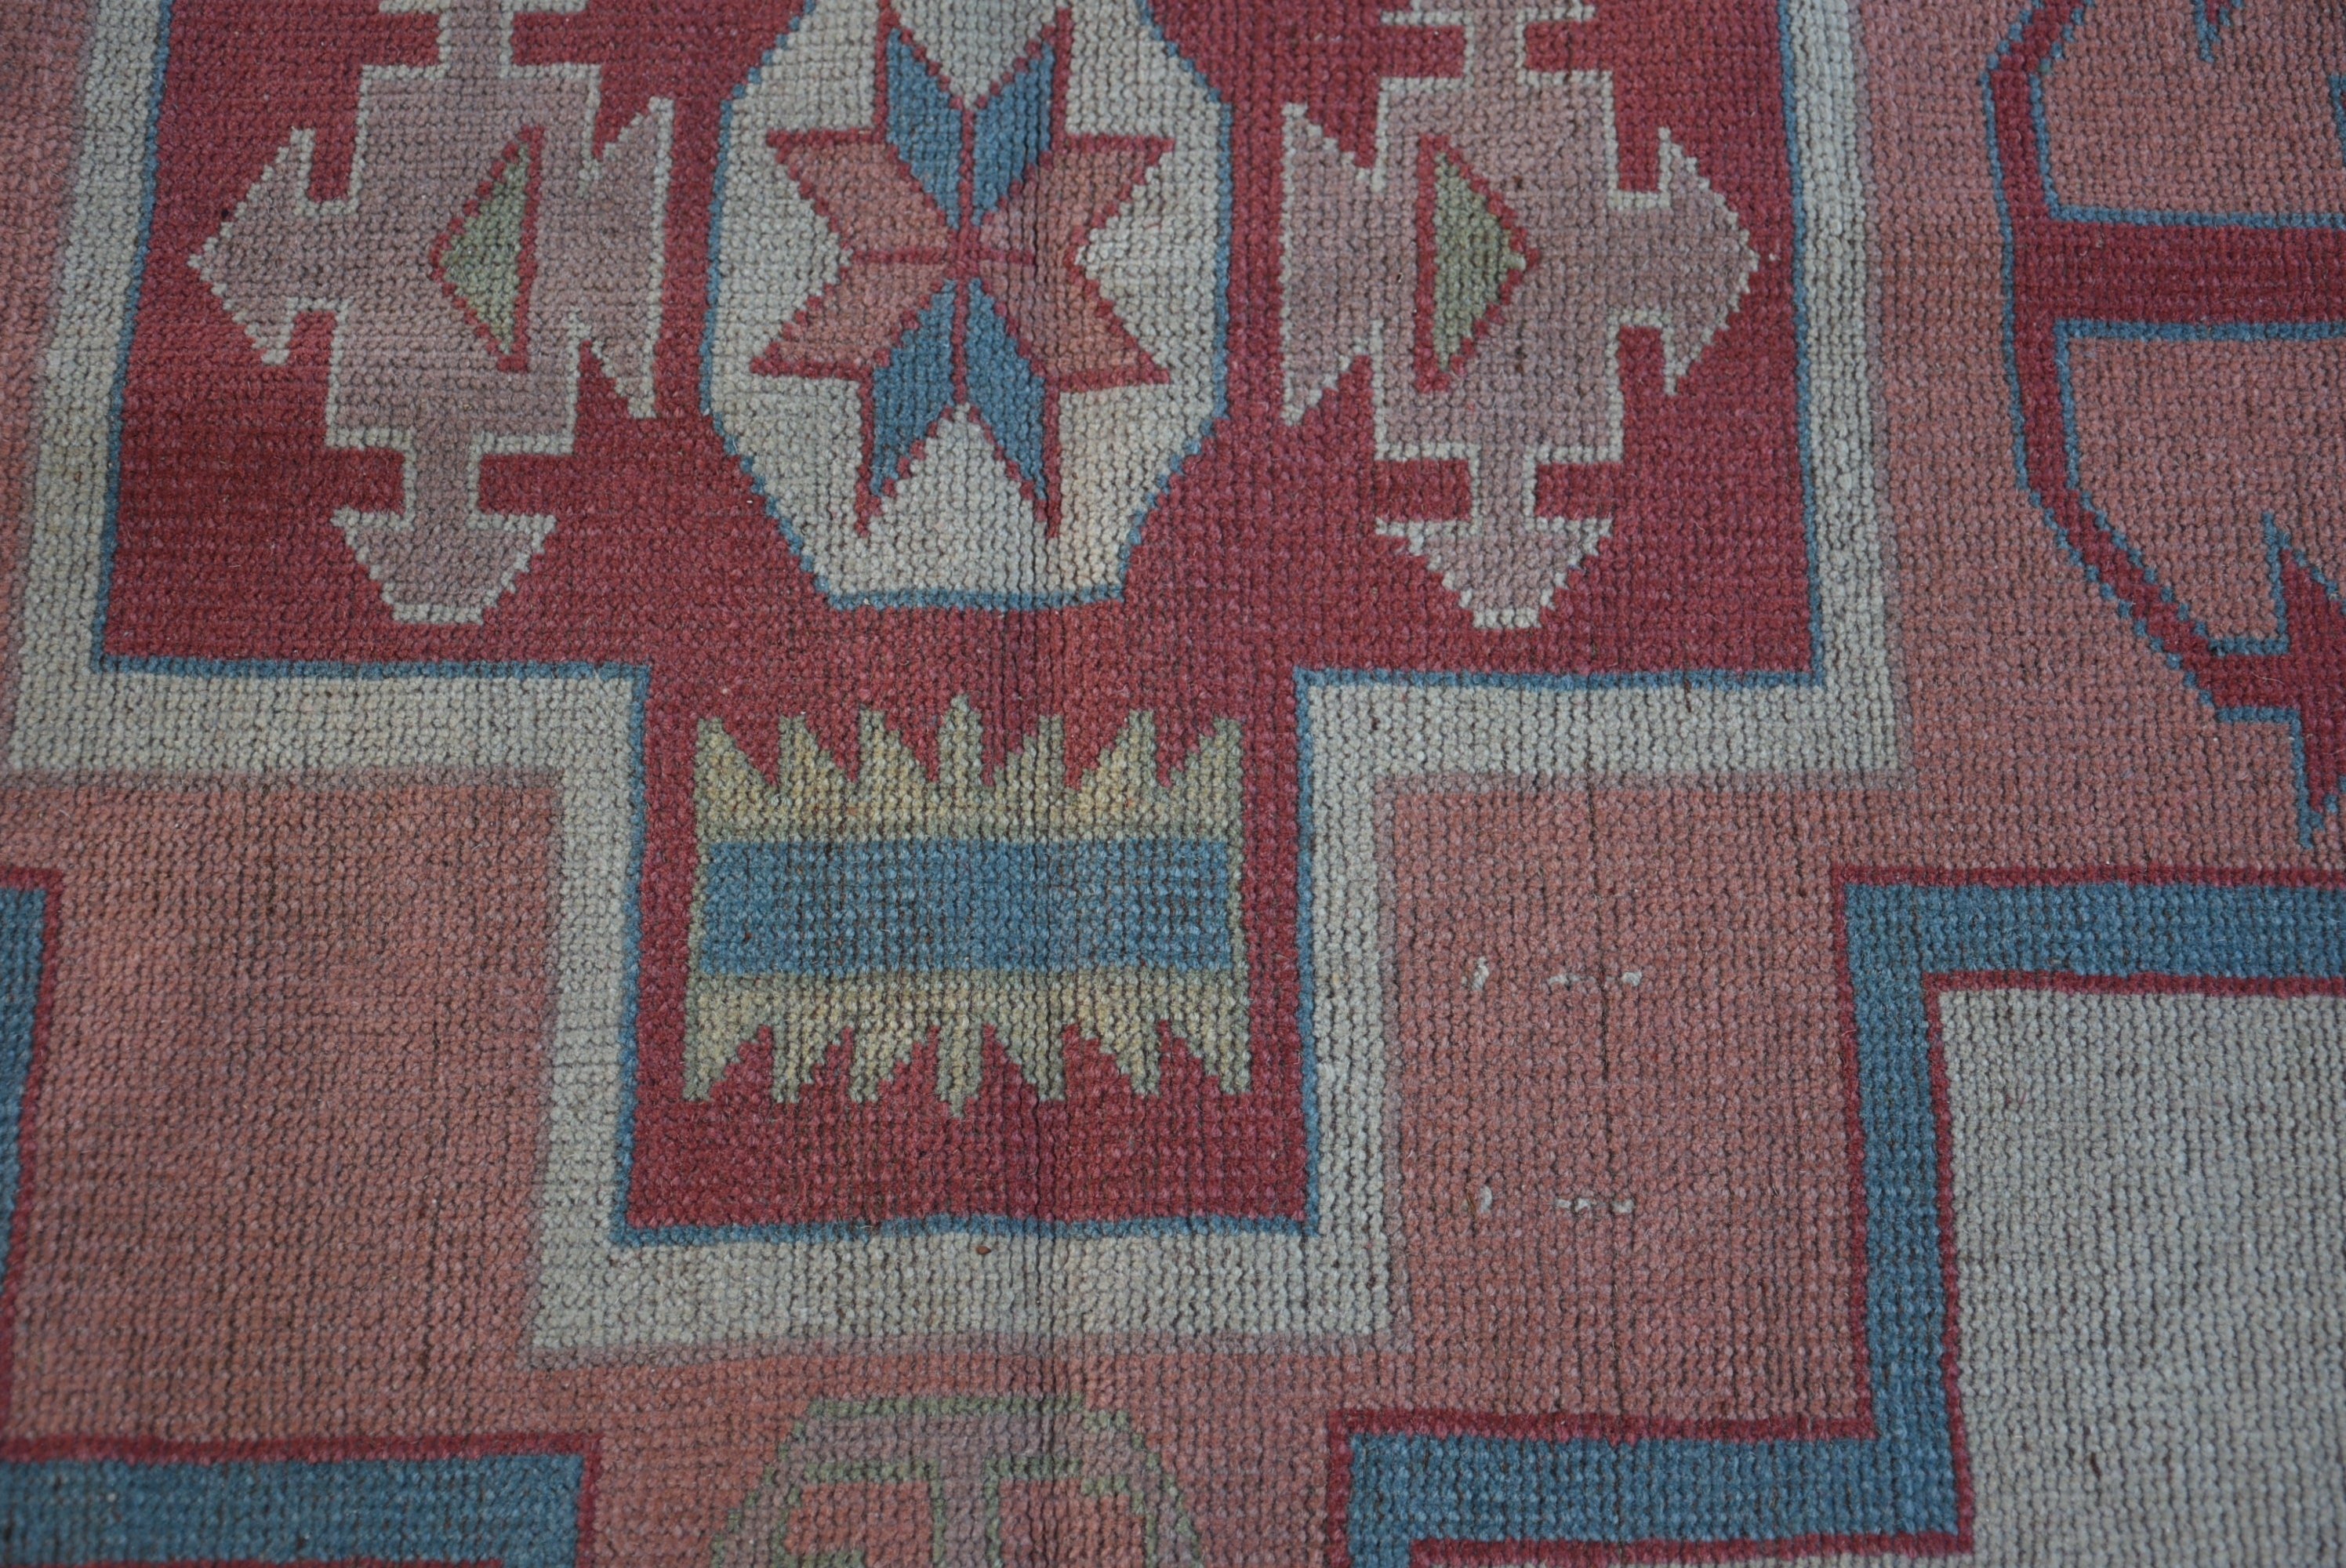 Vintage Rug, Moroccan Rug, Pink Moroccan Rug, Rugs for Floor, Dining Room Rug, 5.1x7.3 ft Area Rug, Floor Rug, Turkish Rug, Kitchen Rug